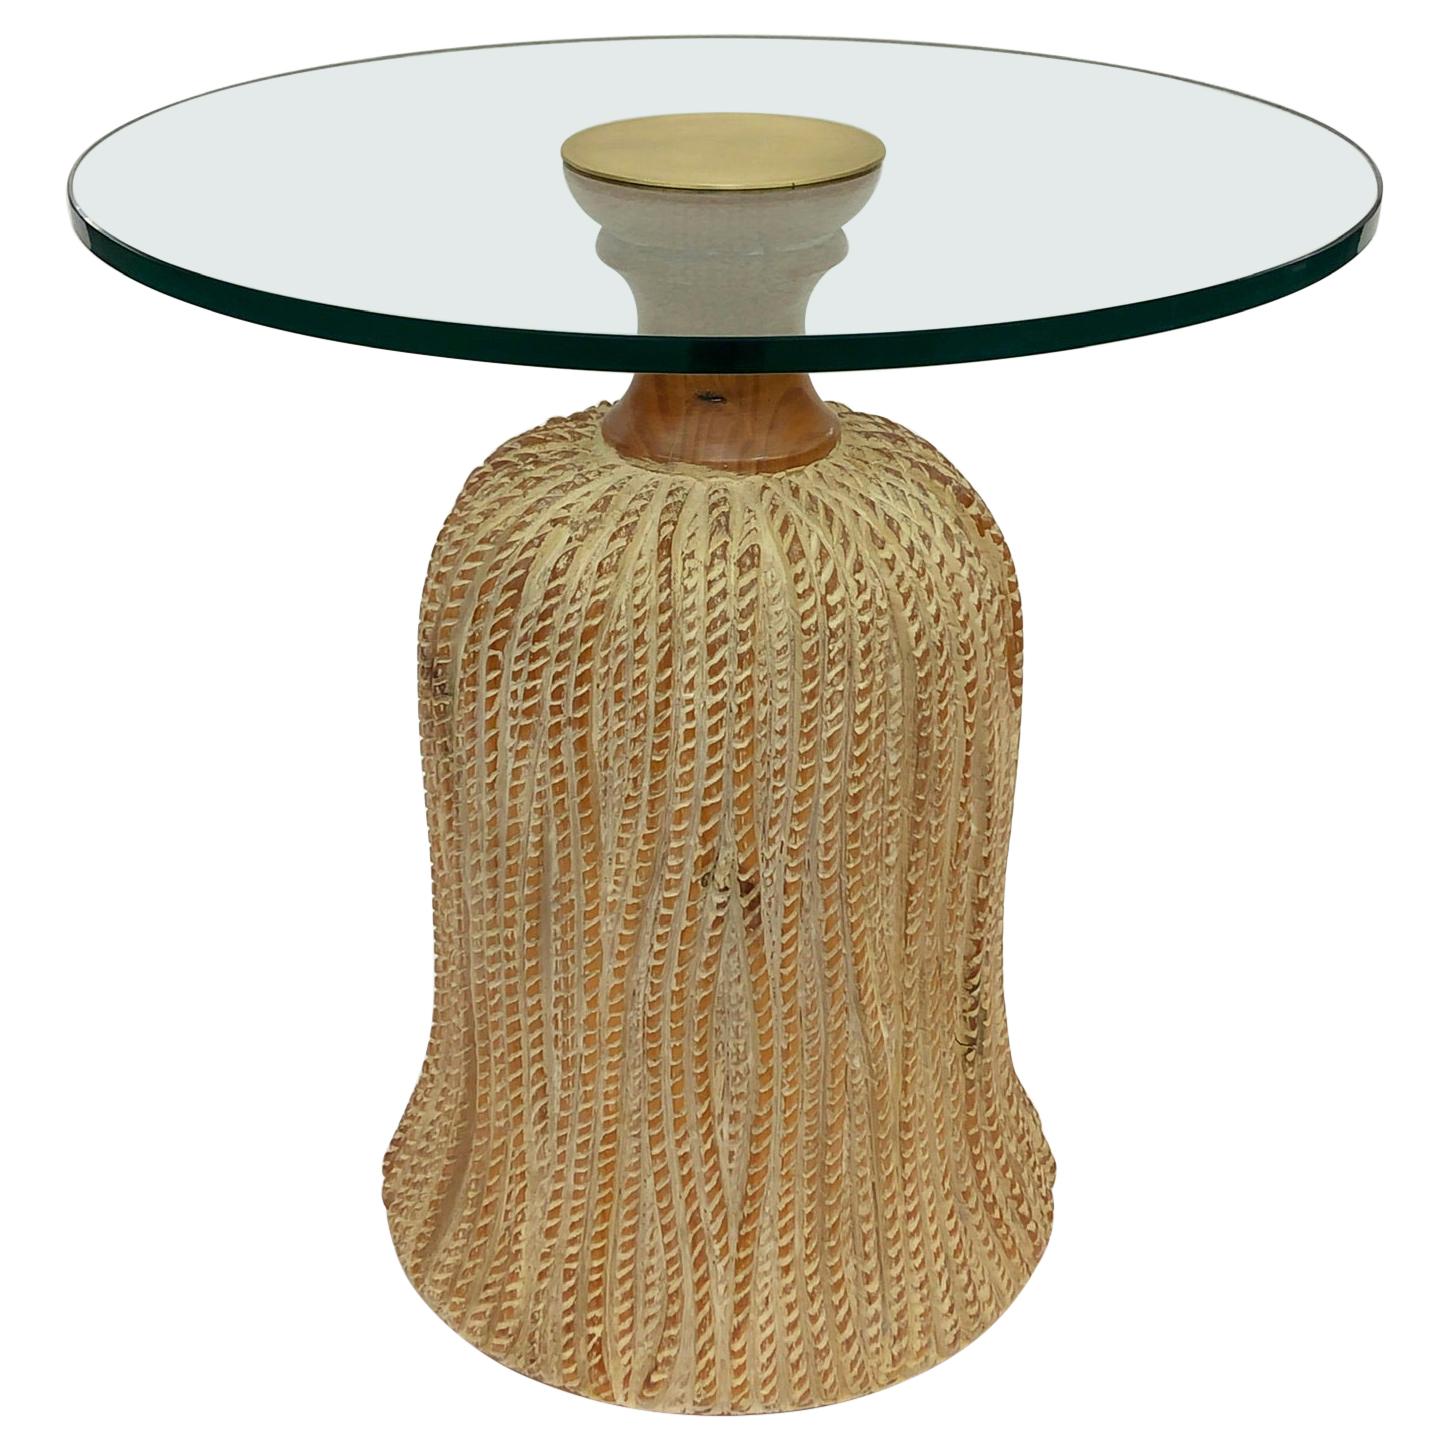 Spanish Wood Tassel and Glass Side Table by Sarreid Ltd.